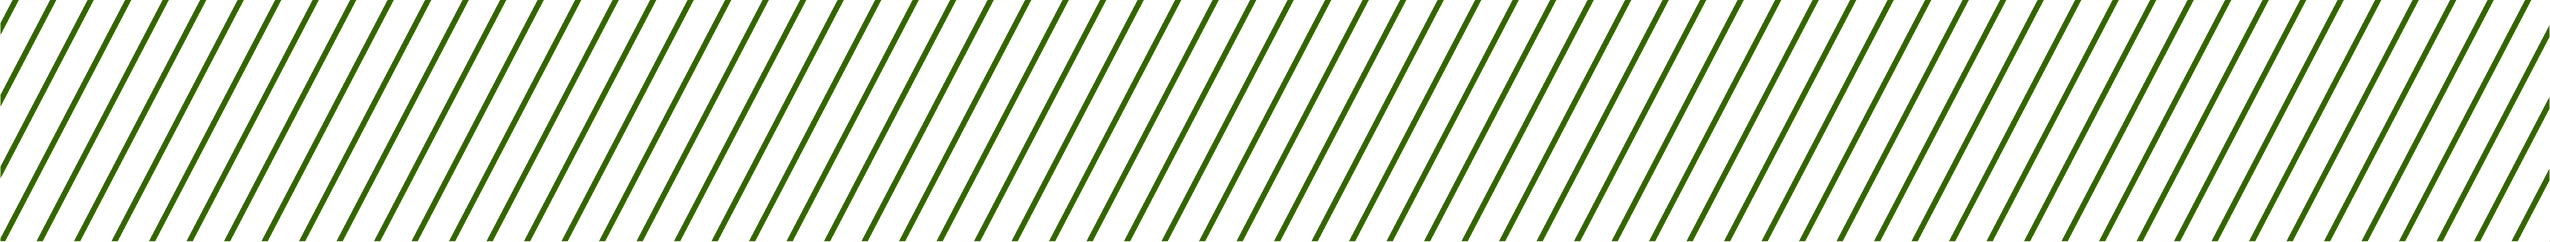 diagonal lines